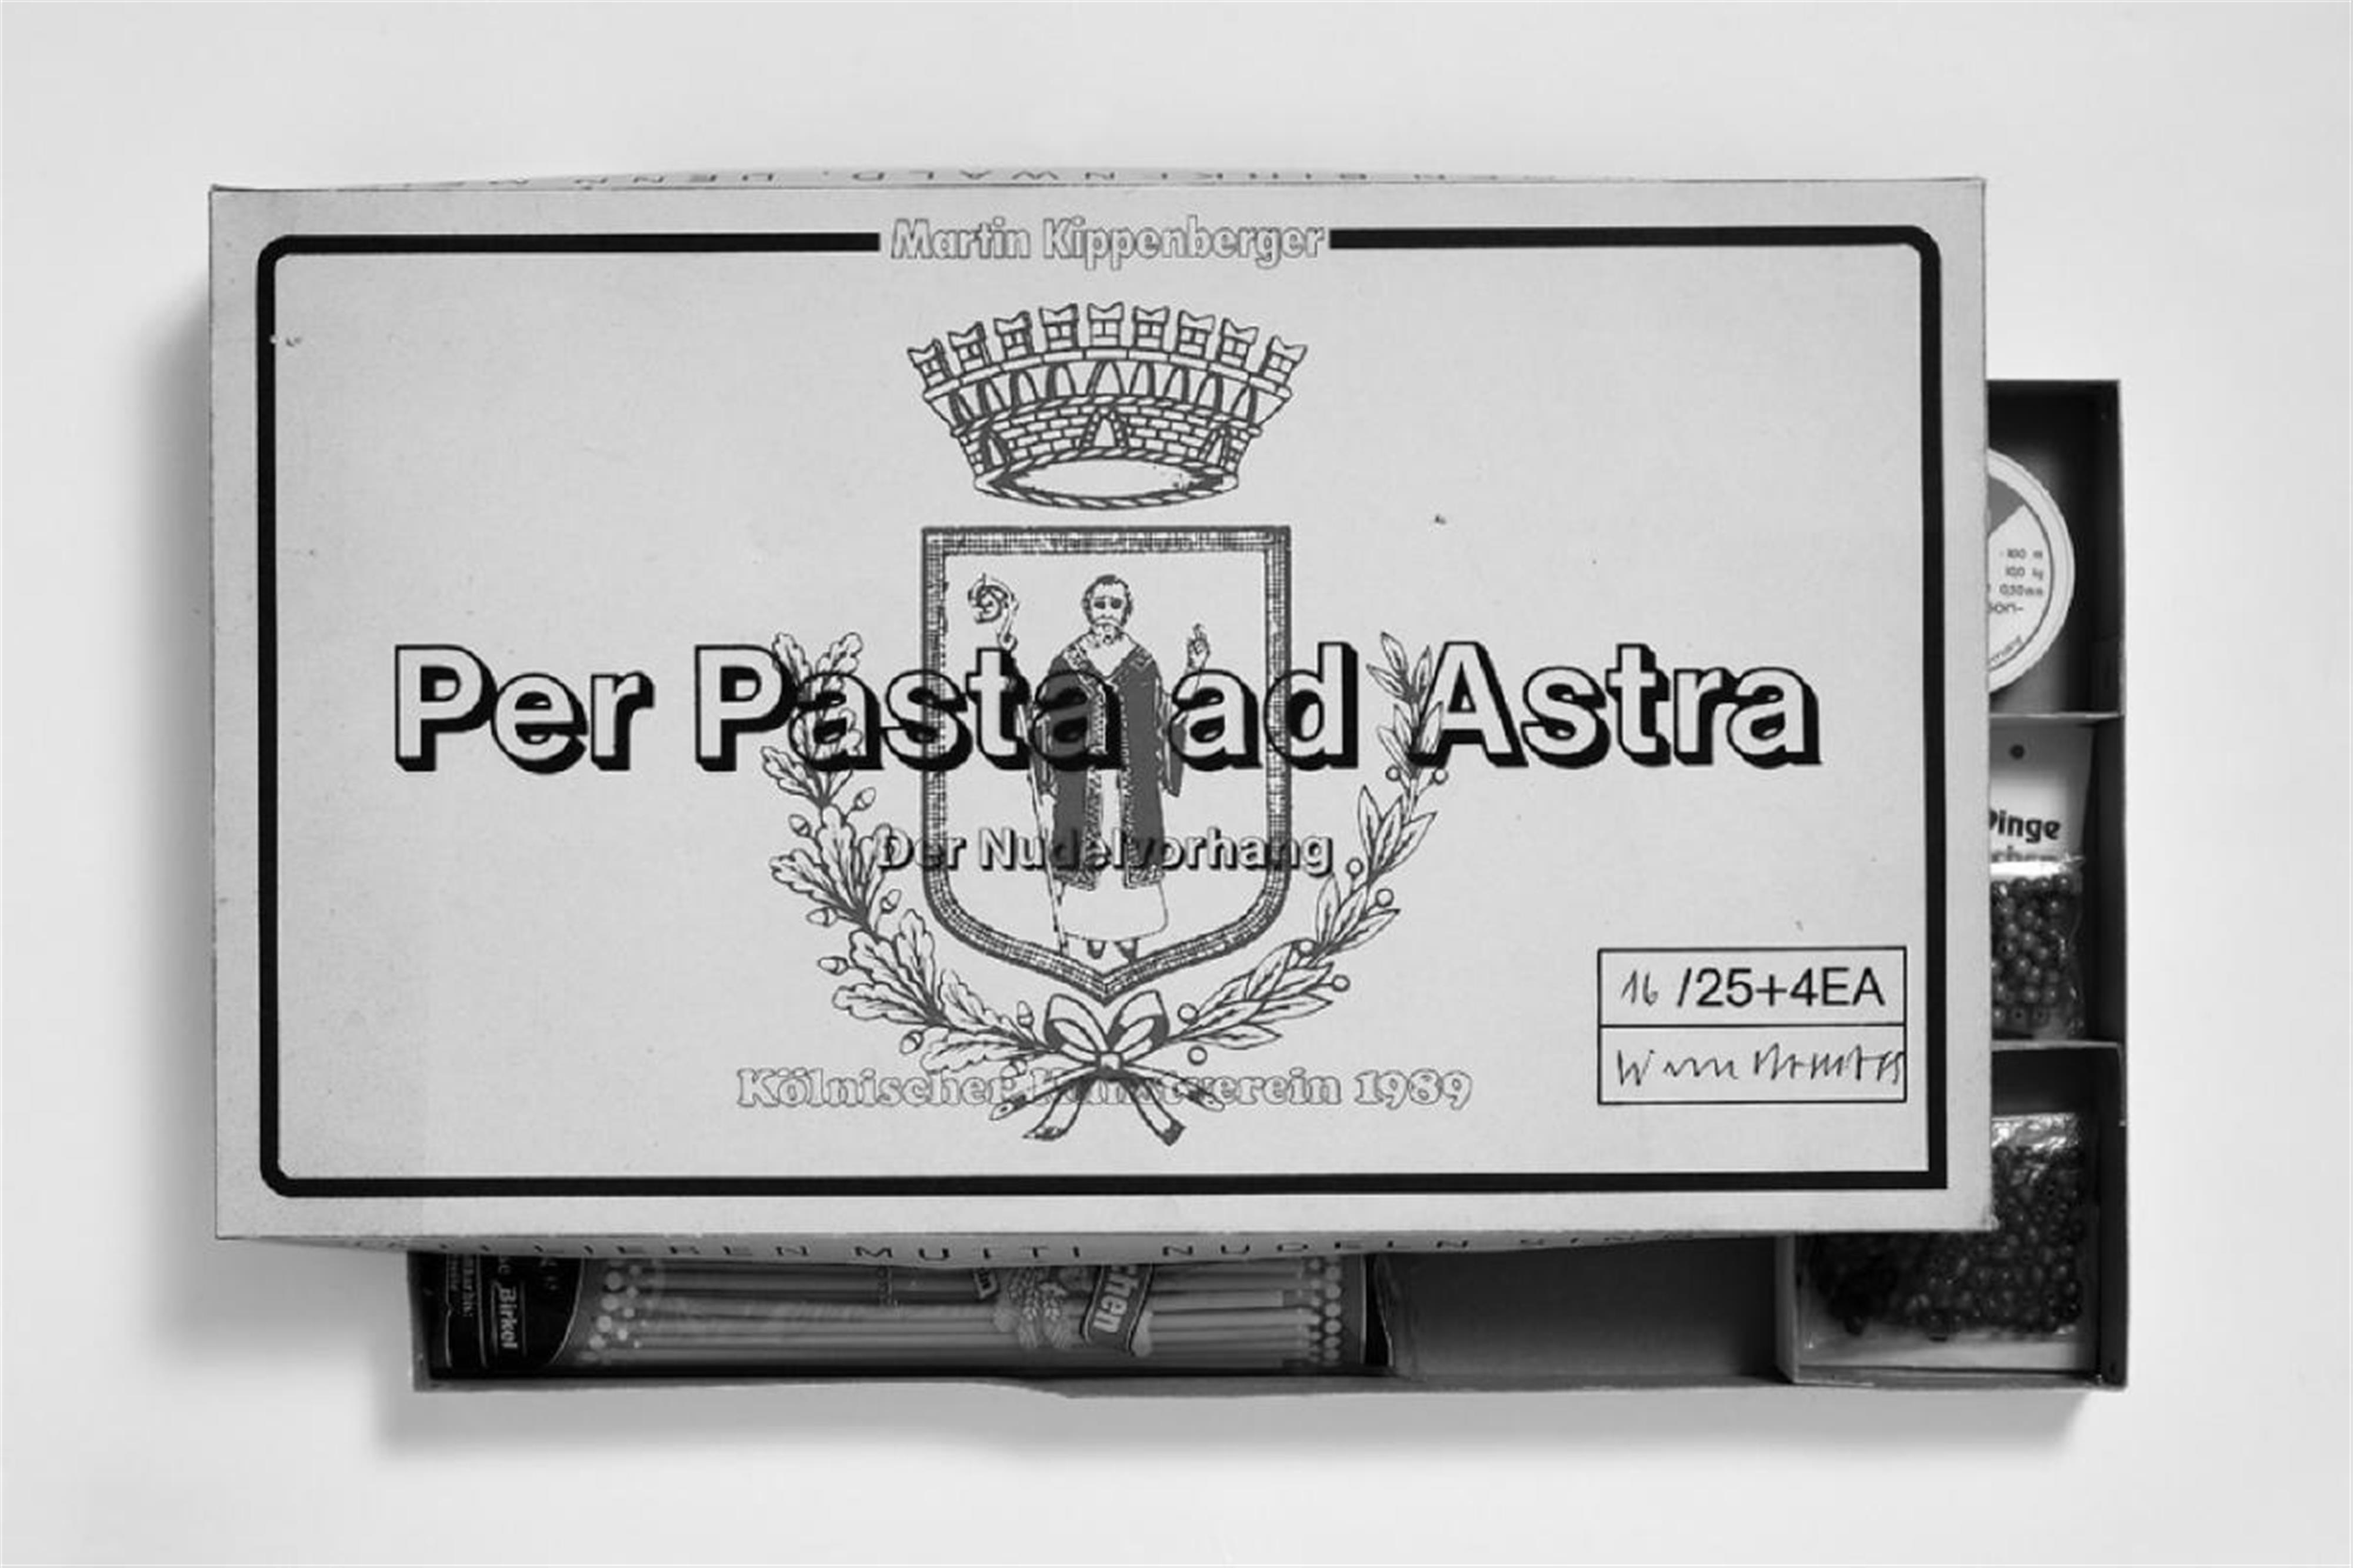 Martin Kippenberger - Per Pastra ad Astra - image-1